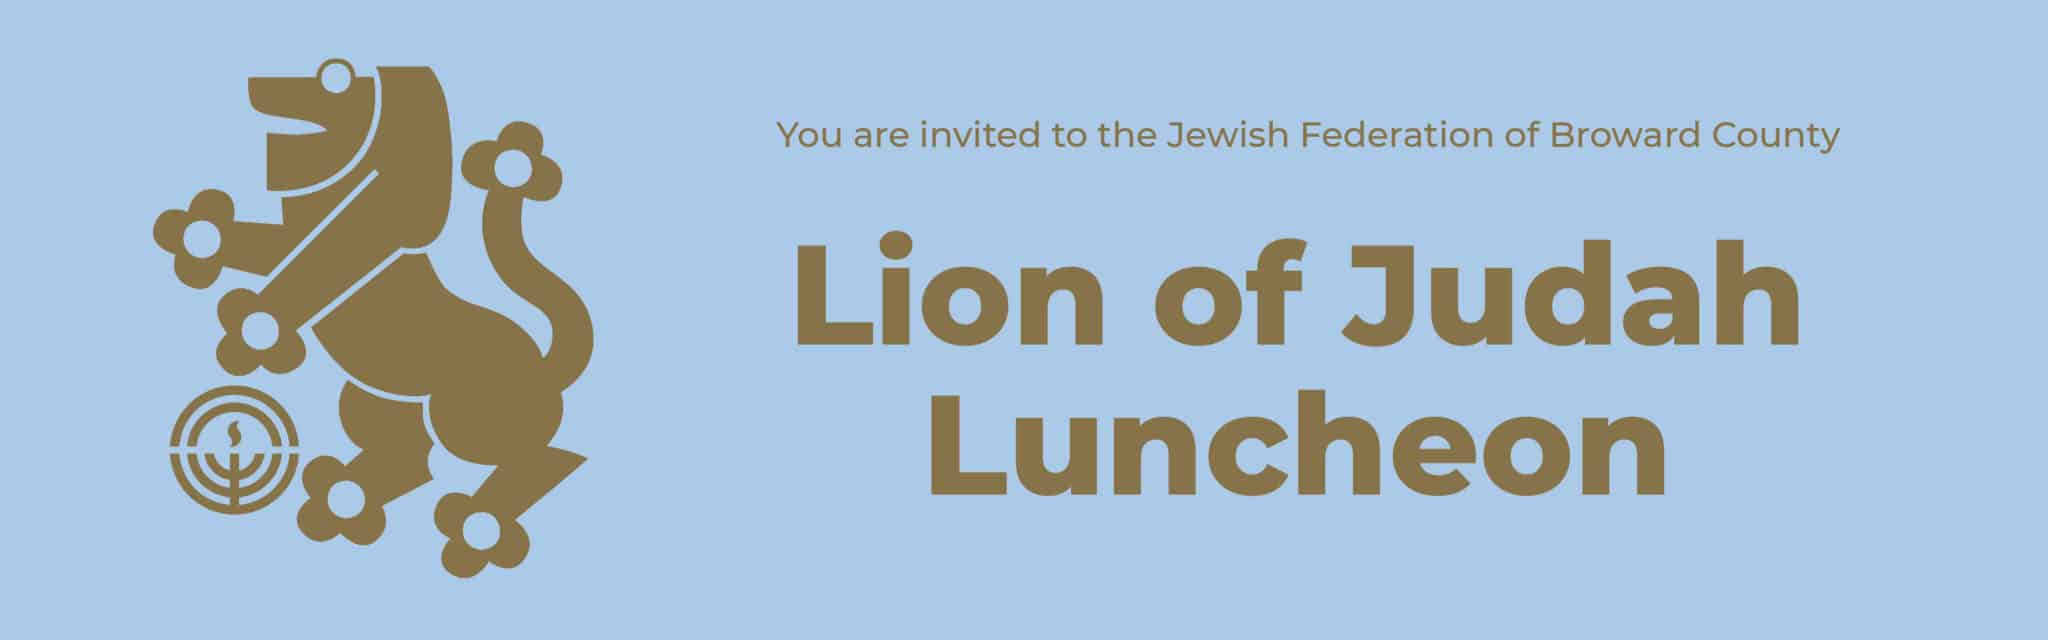 LOJ Luncheon Banner